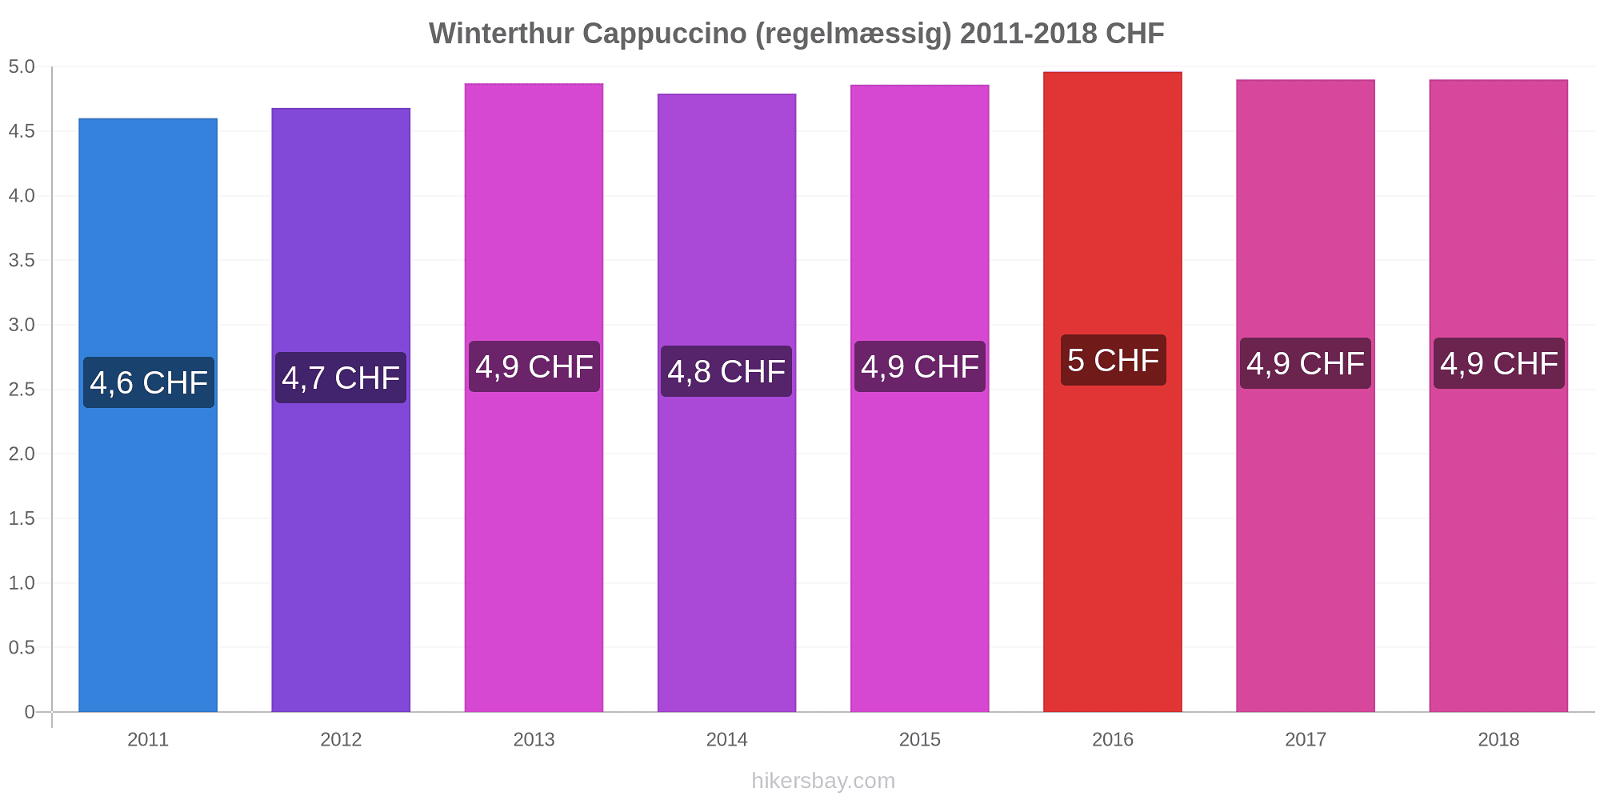 Winterthur prisændringer Cappuccino (regelmæssig) hikersbay.com